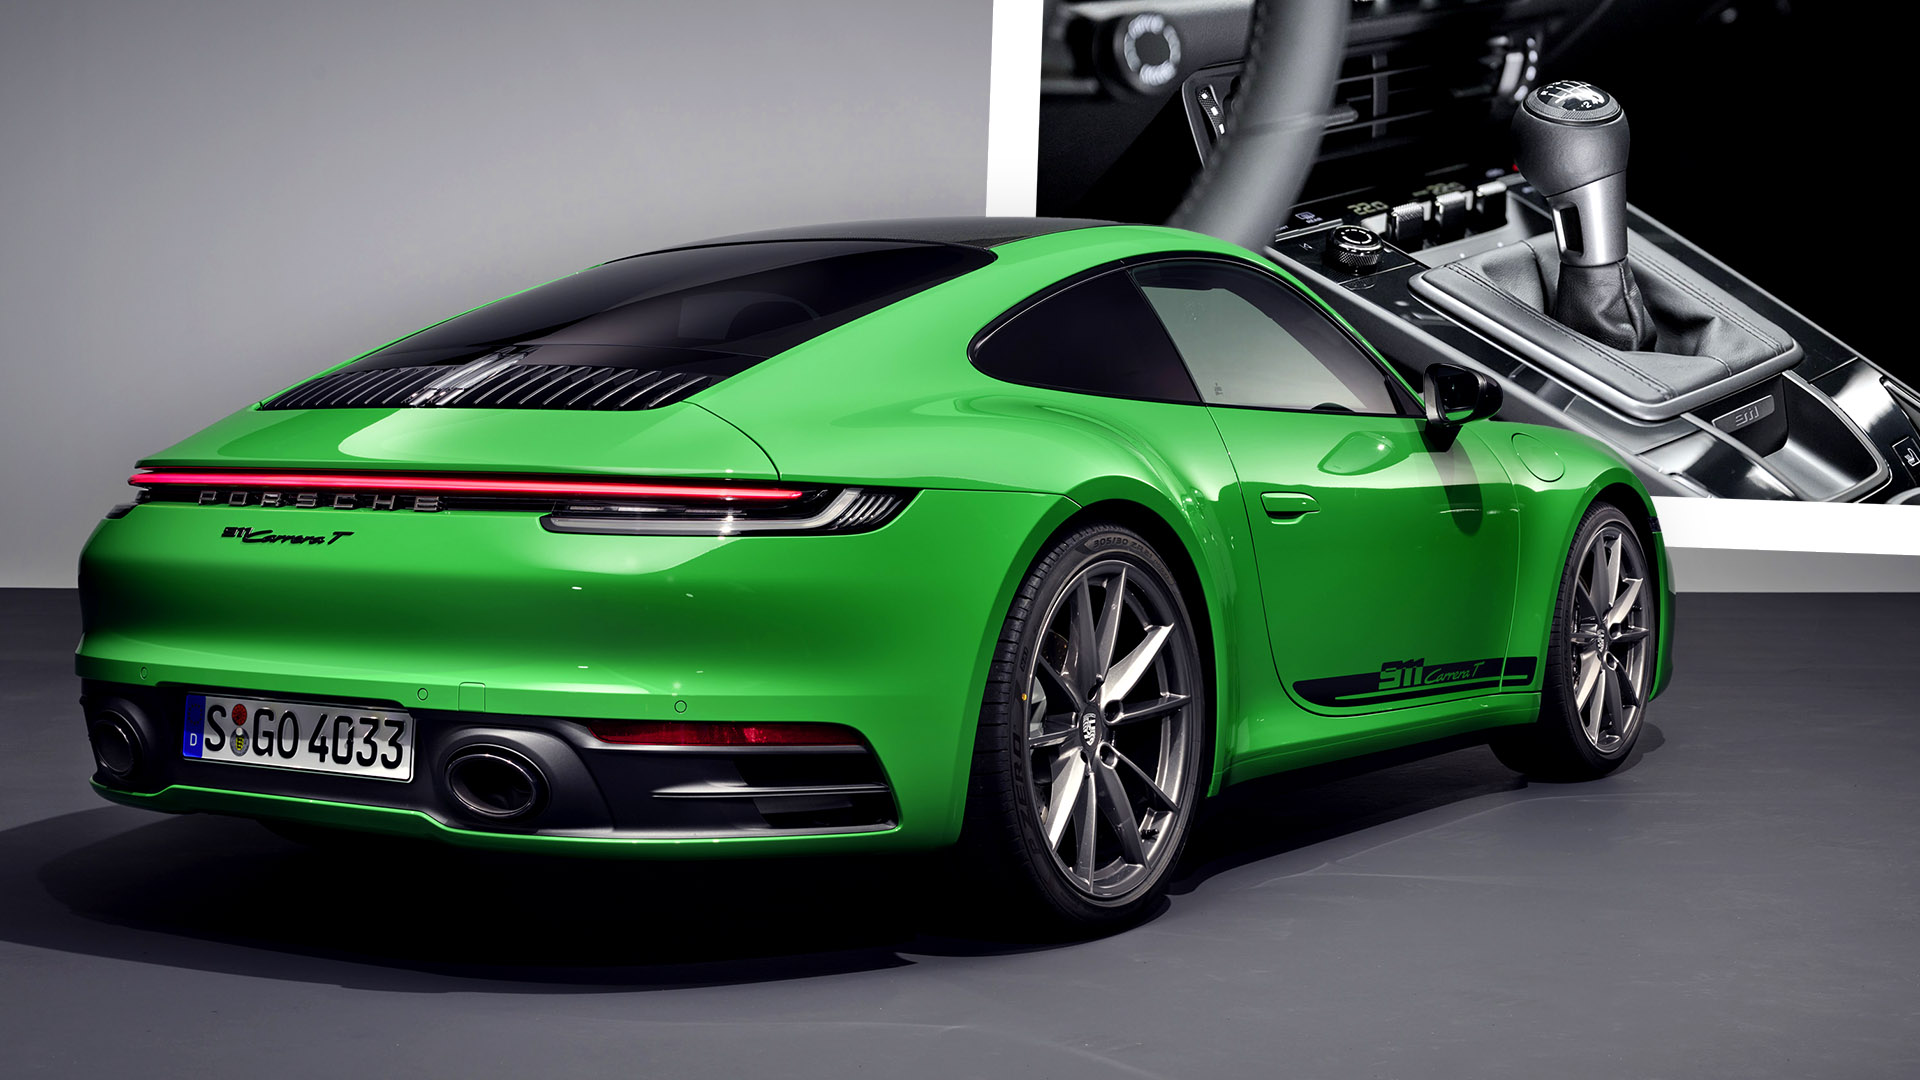 2023 Carrera T Builds on the Porsche 911's Base Brilliance - CNET